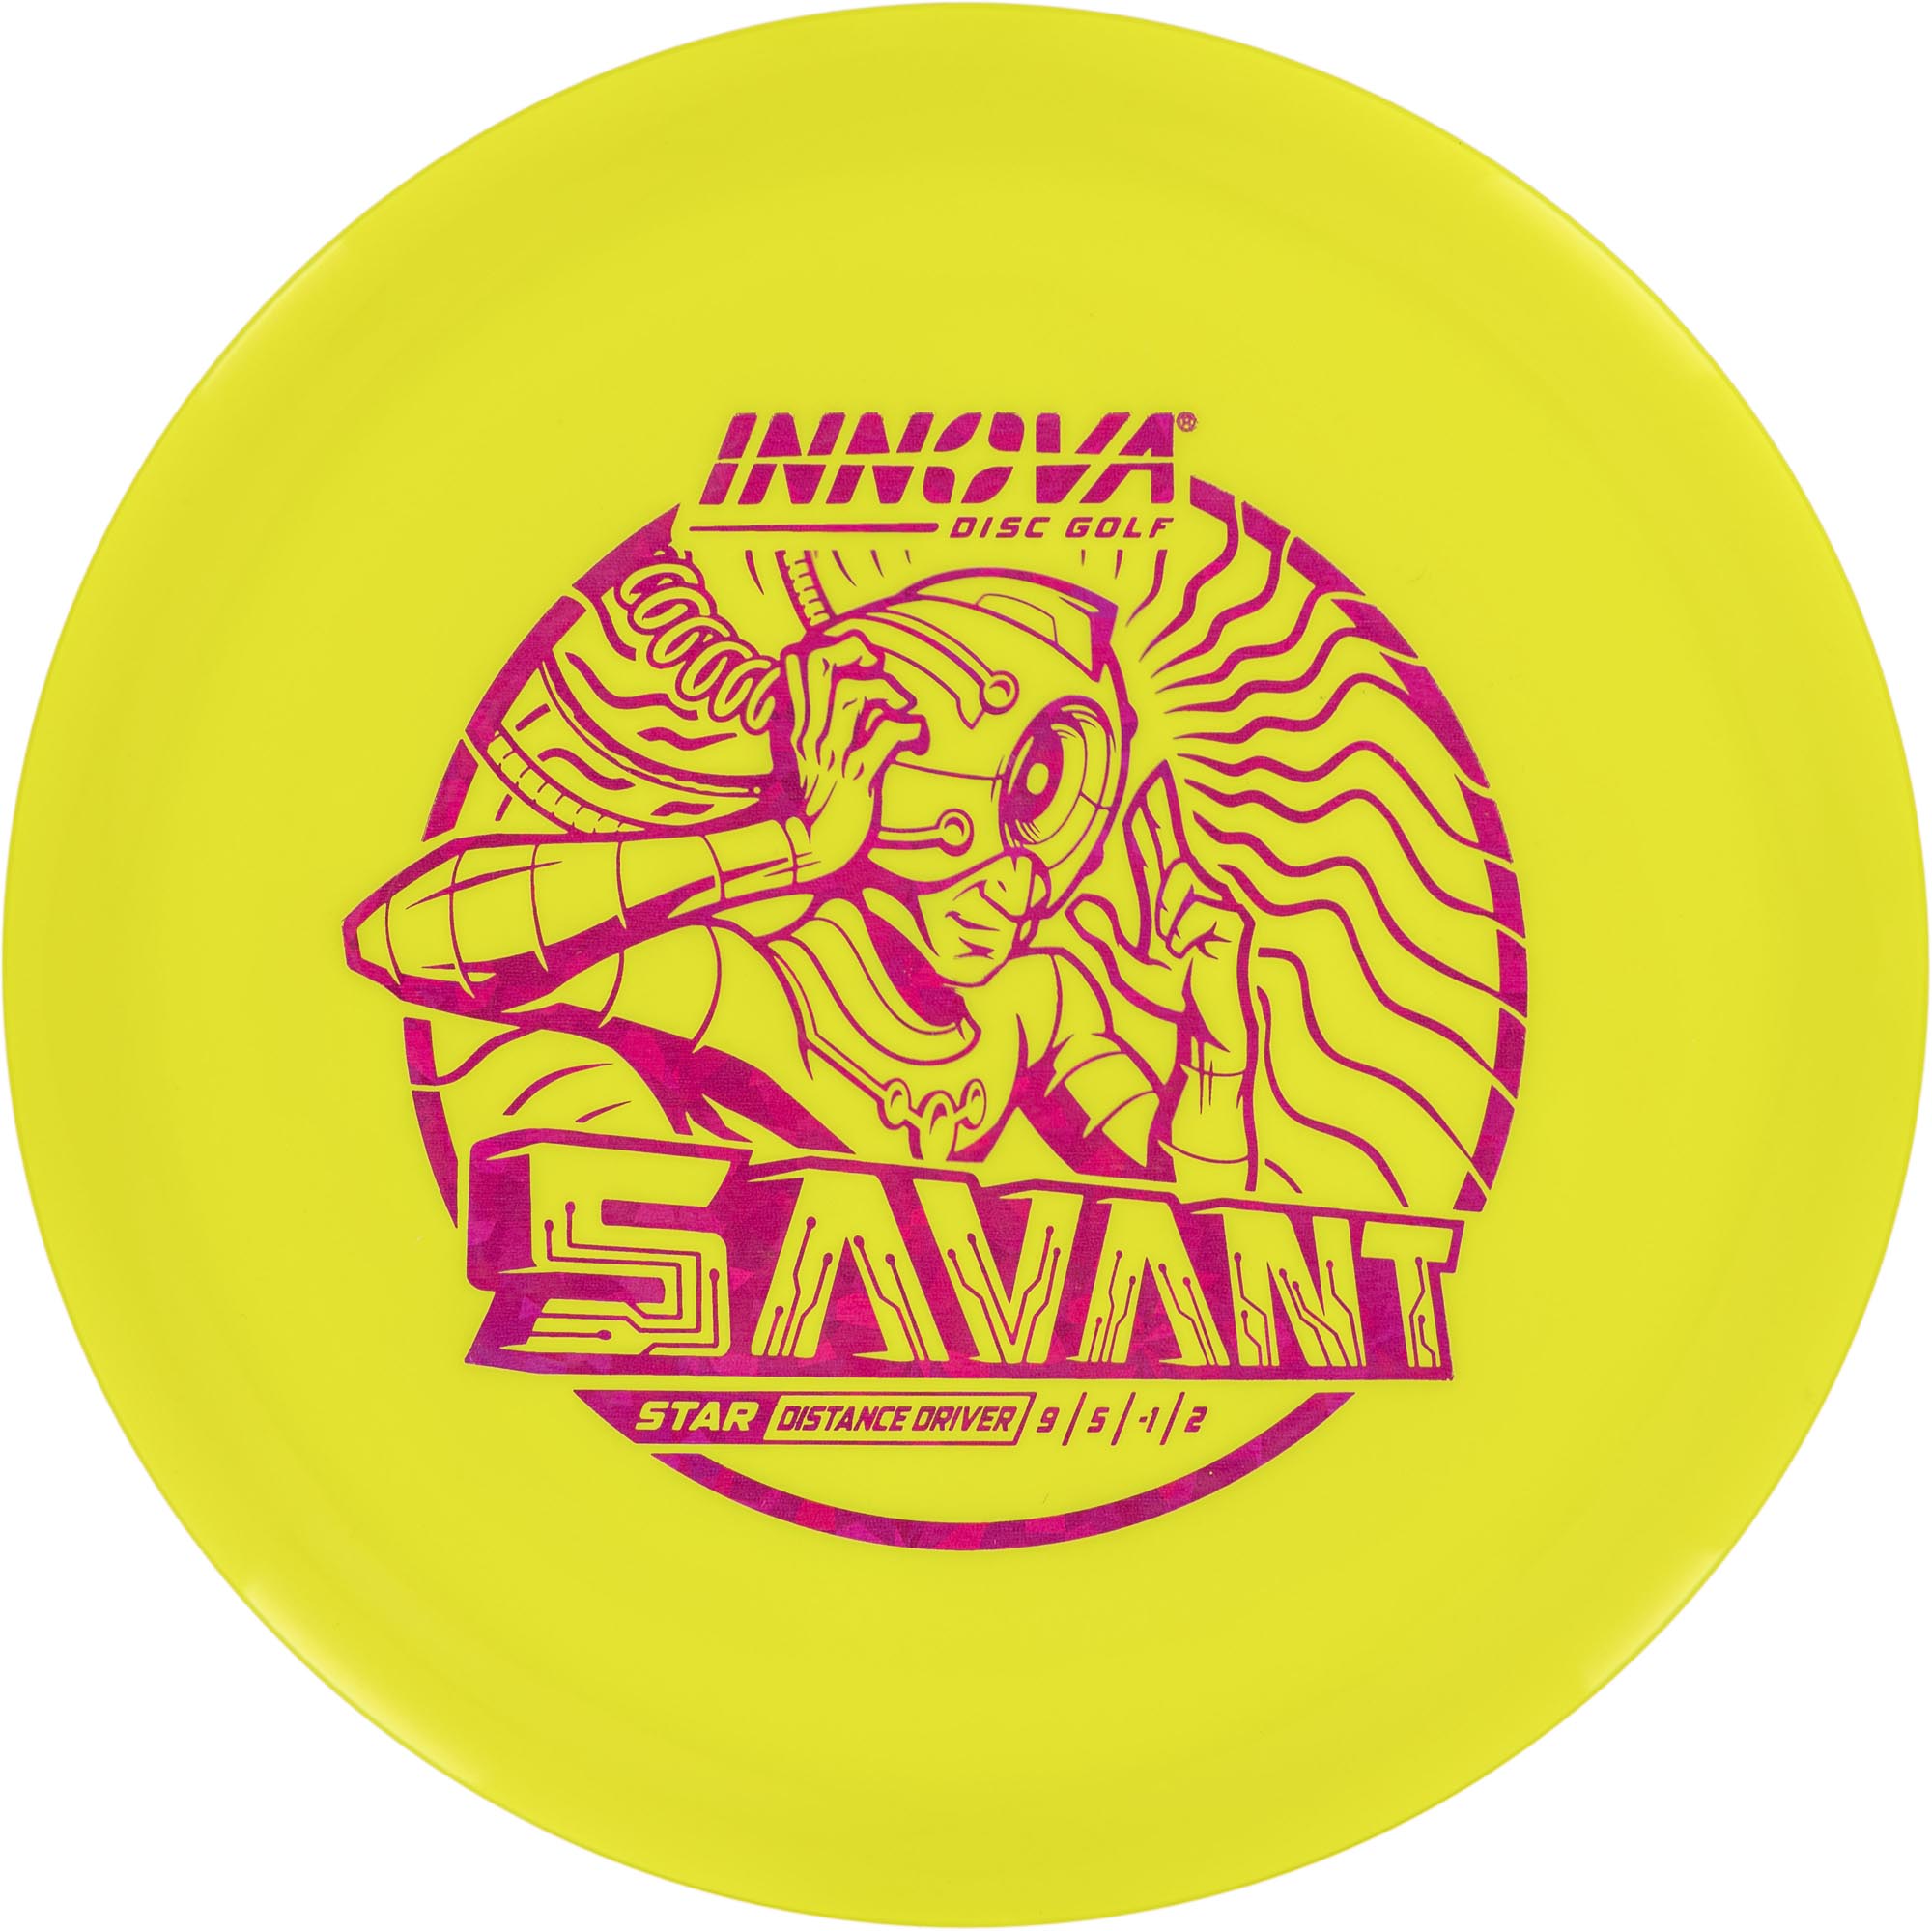 Star Savant from Disc Golf United